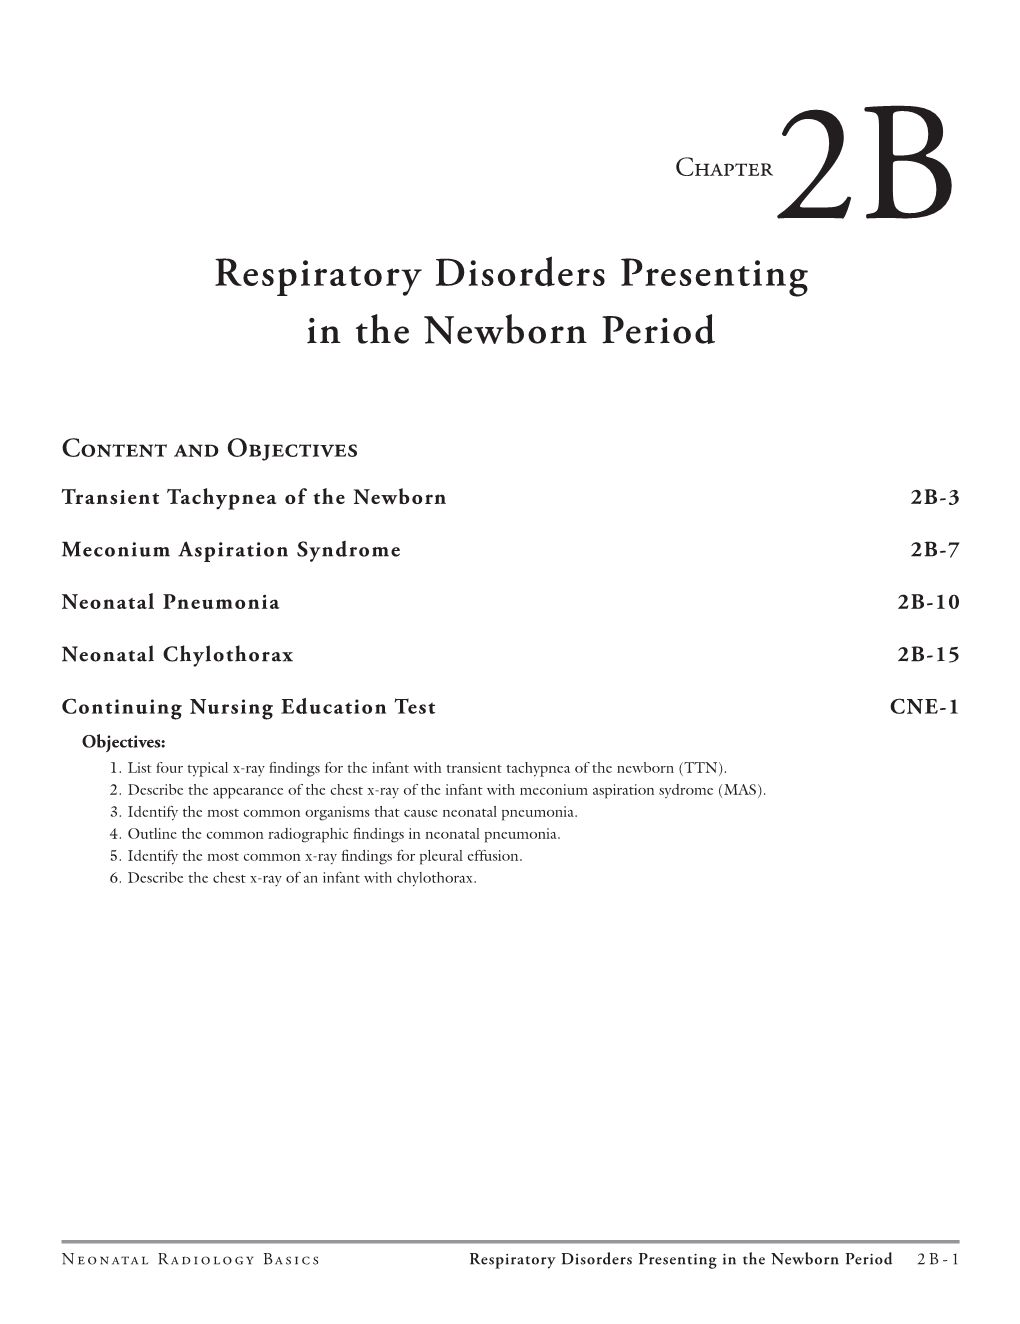 Respiratory Disorders Presenting in the Newborn Period